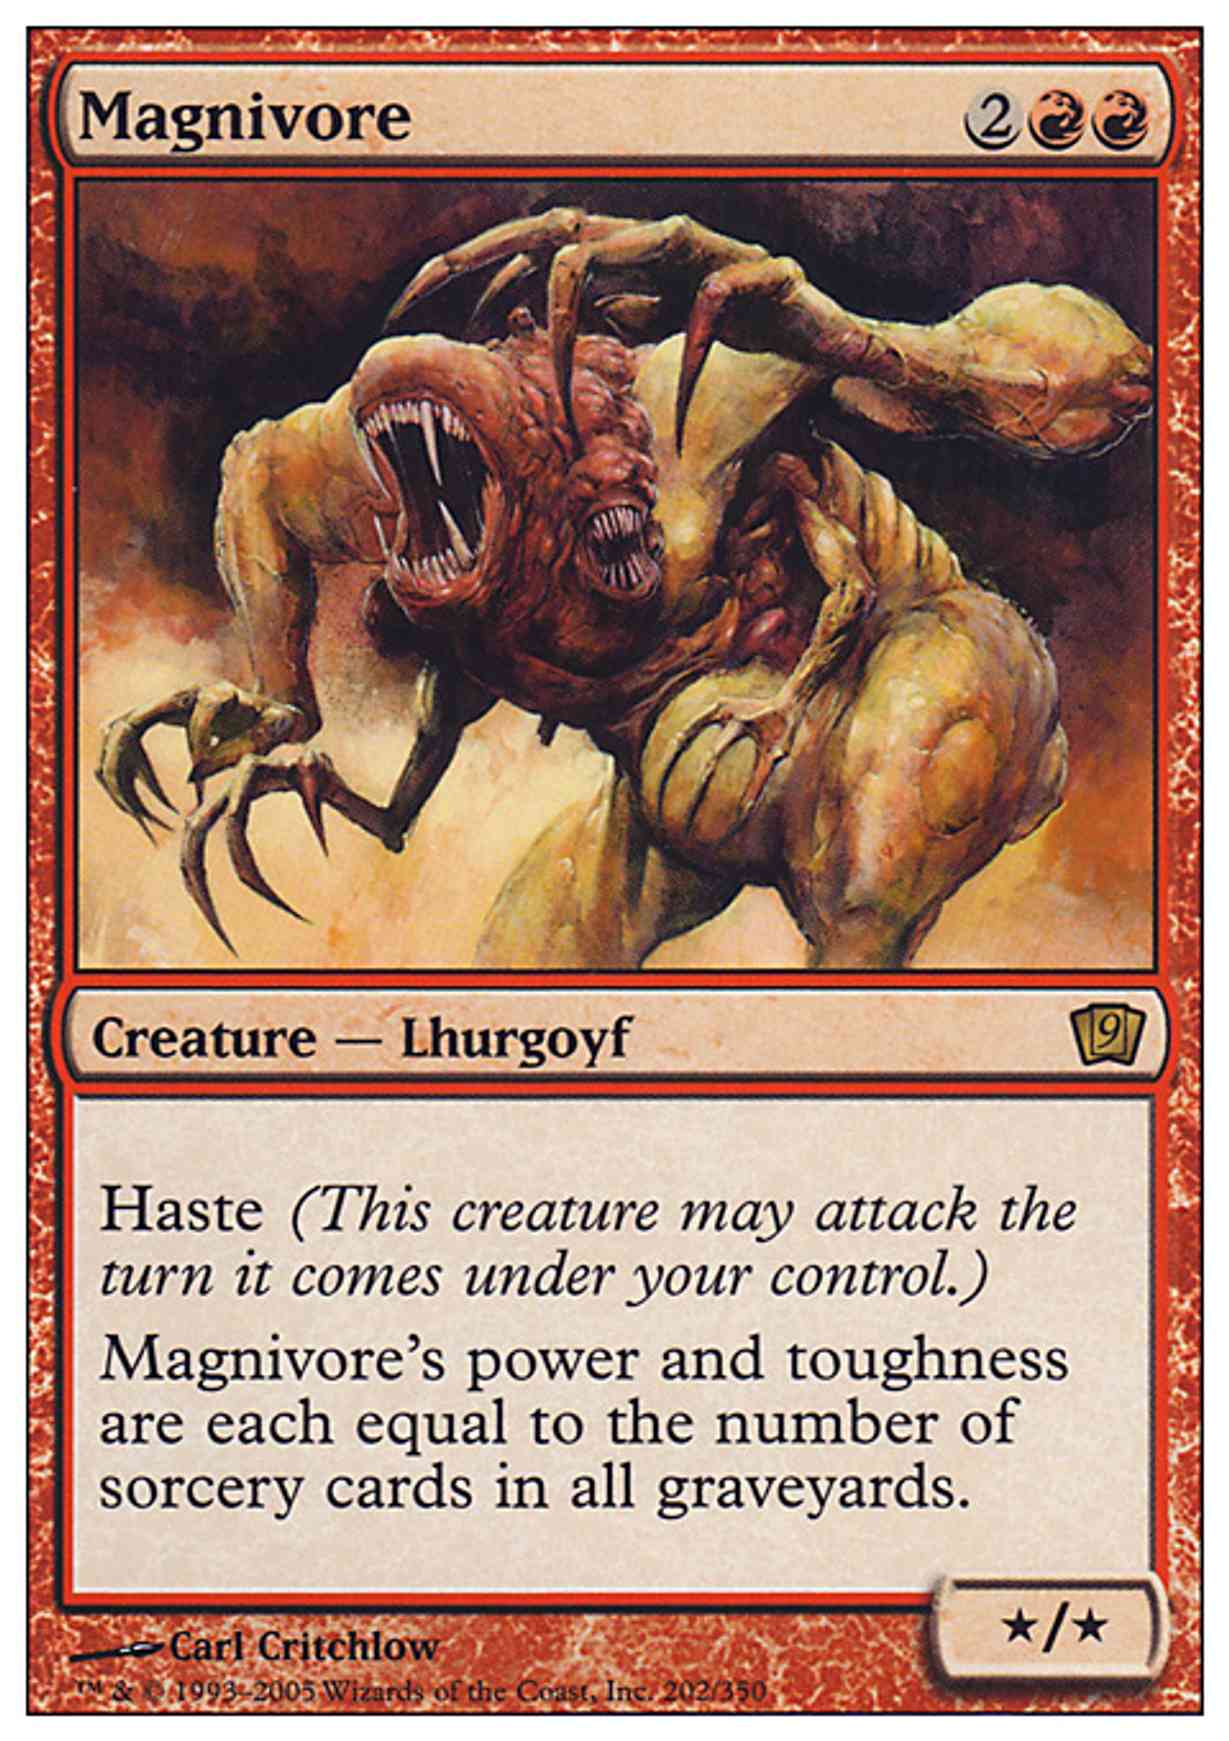 Magnivore magic card front